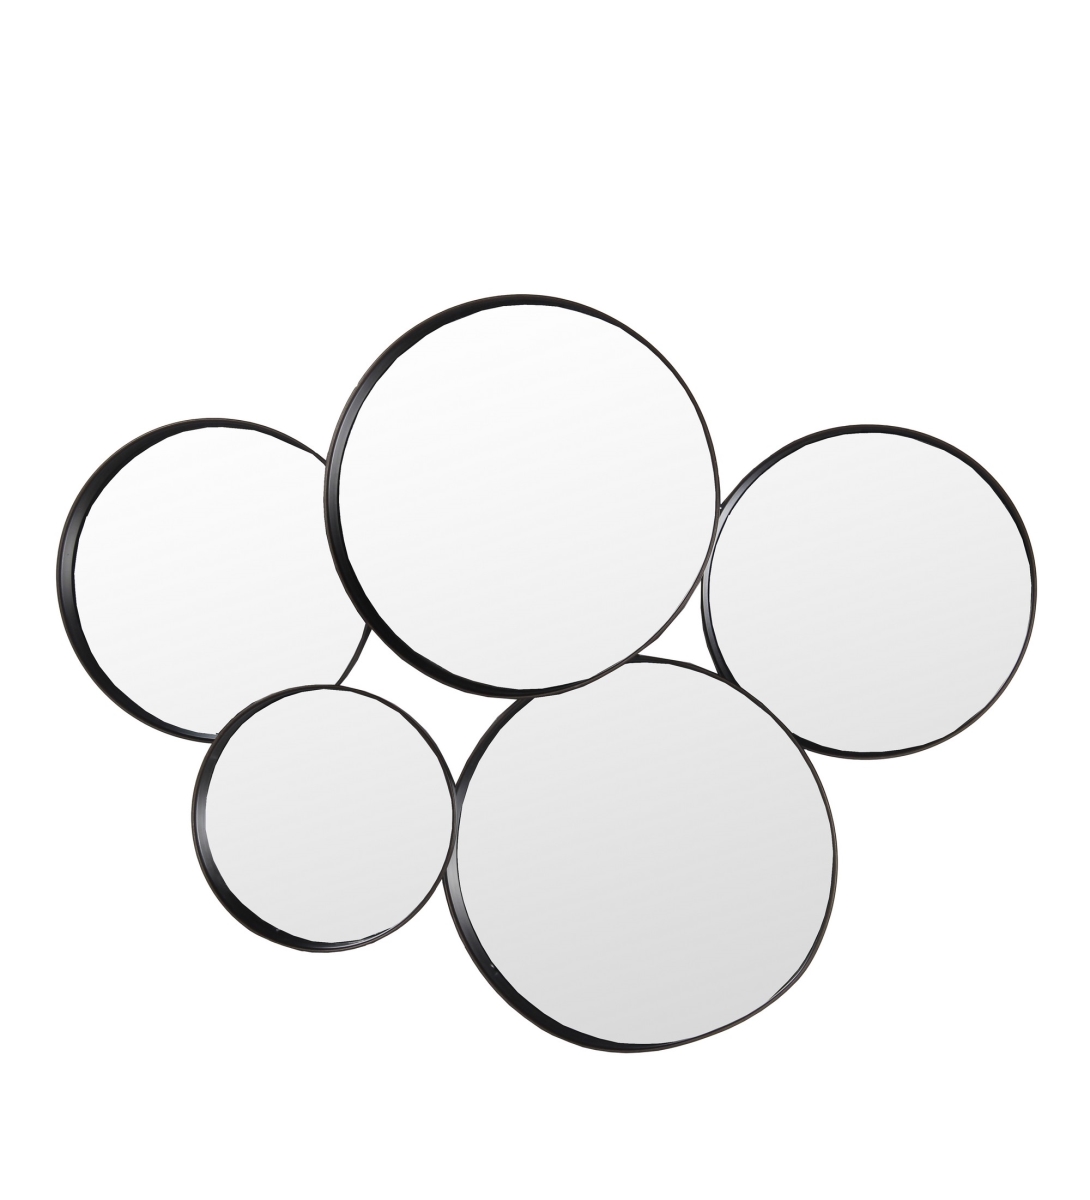 21060 30 X 24 X 4.5 In. 5-mirror Round Dark Silver Metal Wall Decor